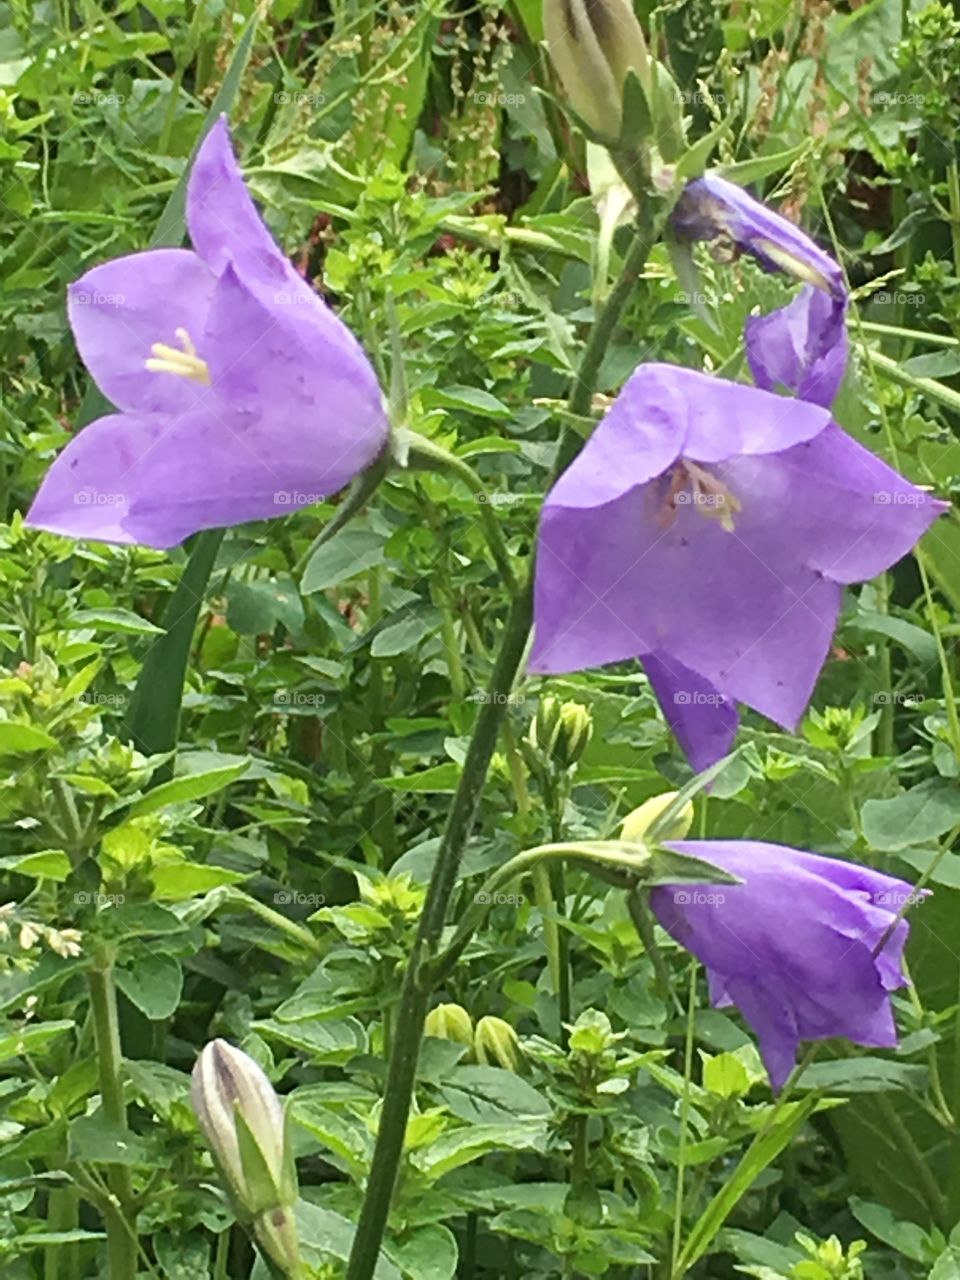 Blue campanula bell flowers on a stem in a garden in summer